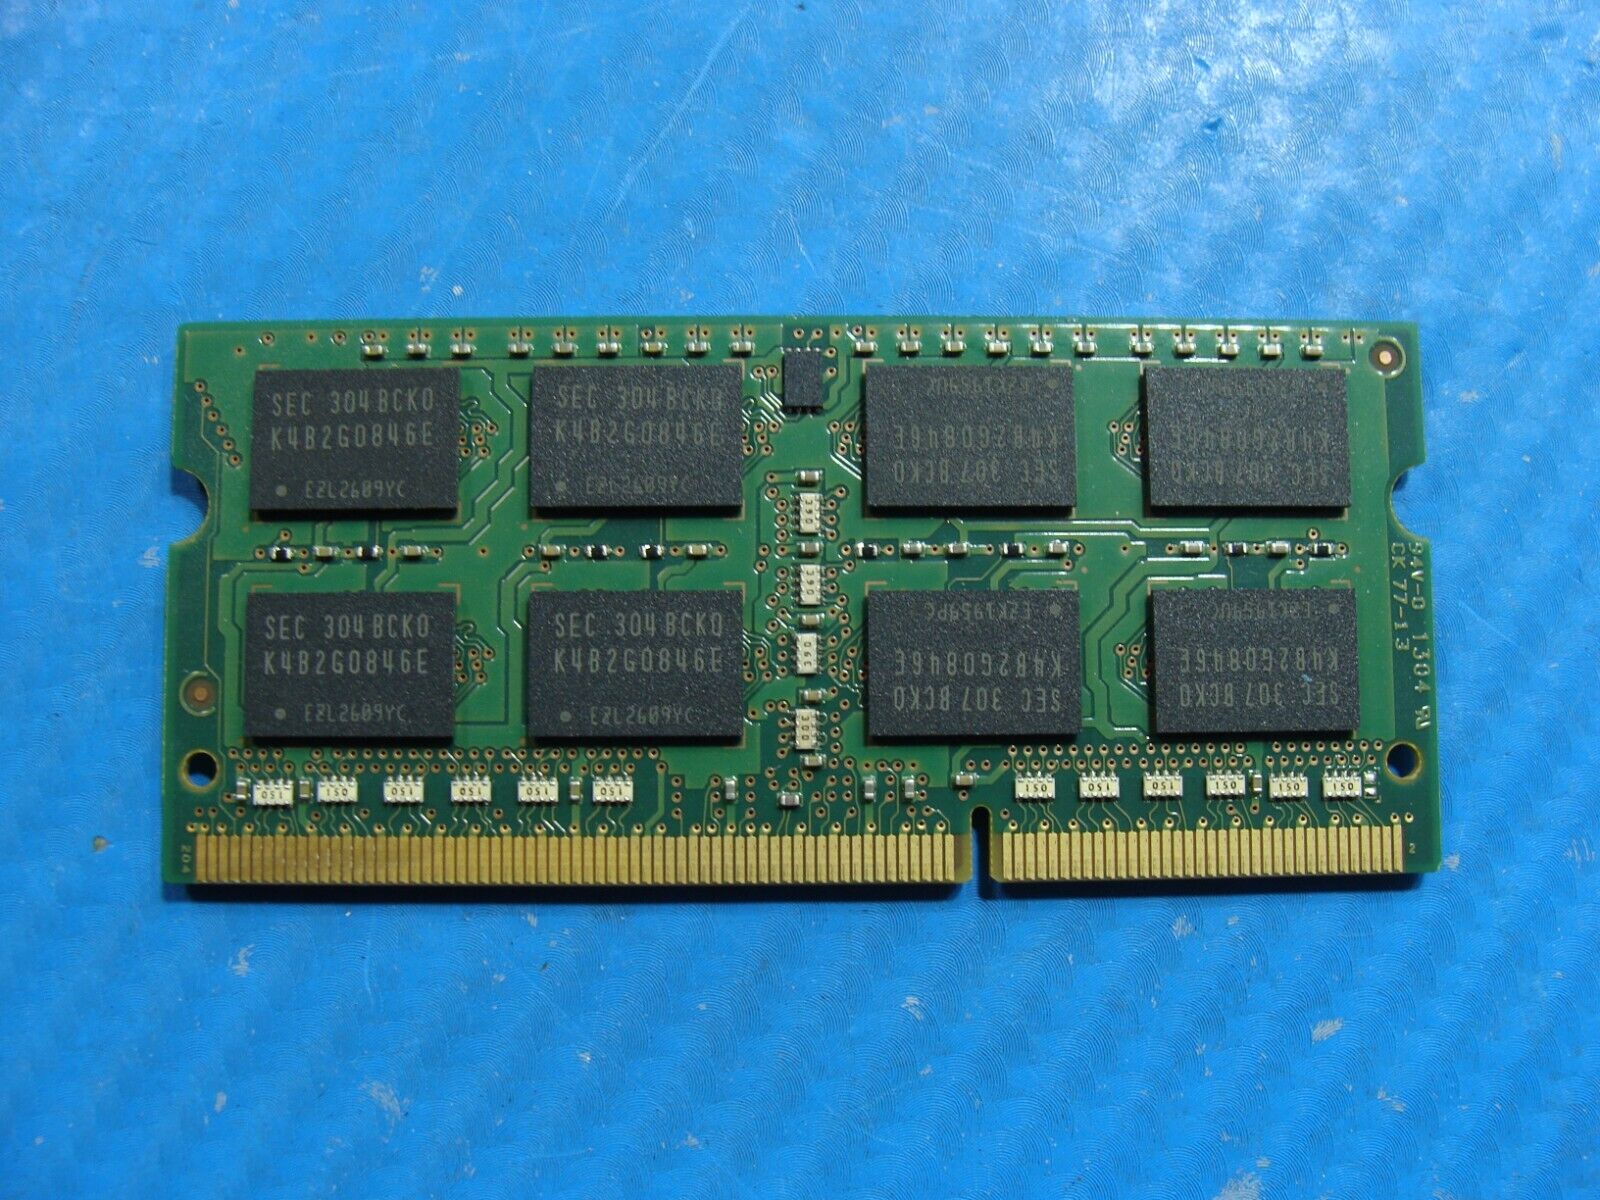 Samsung NP740U3E-A01UB Samsung 4GB 2Rx8 SO-DIMM Memory RAM M471B5273EB0-CK0